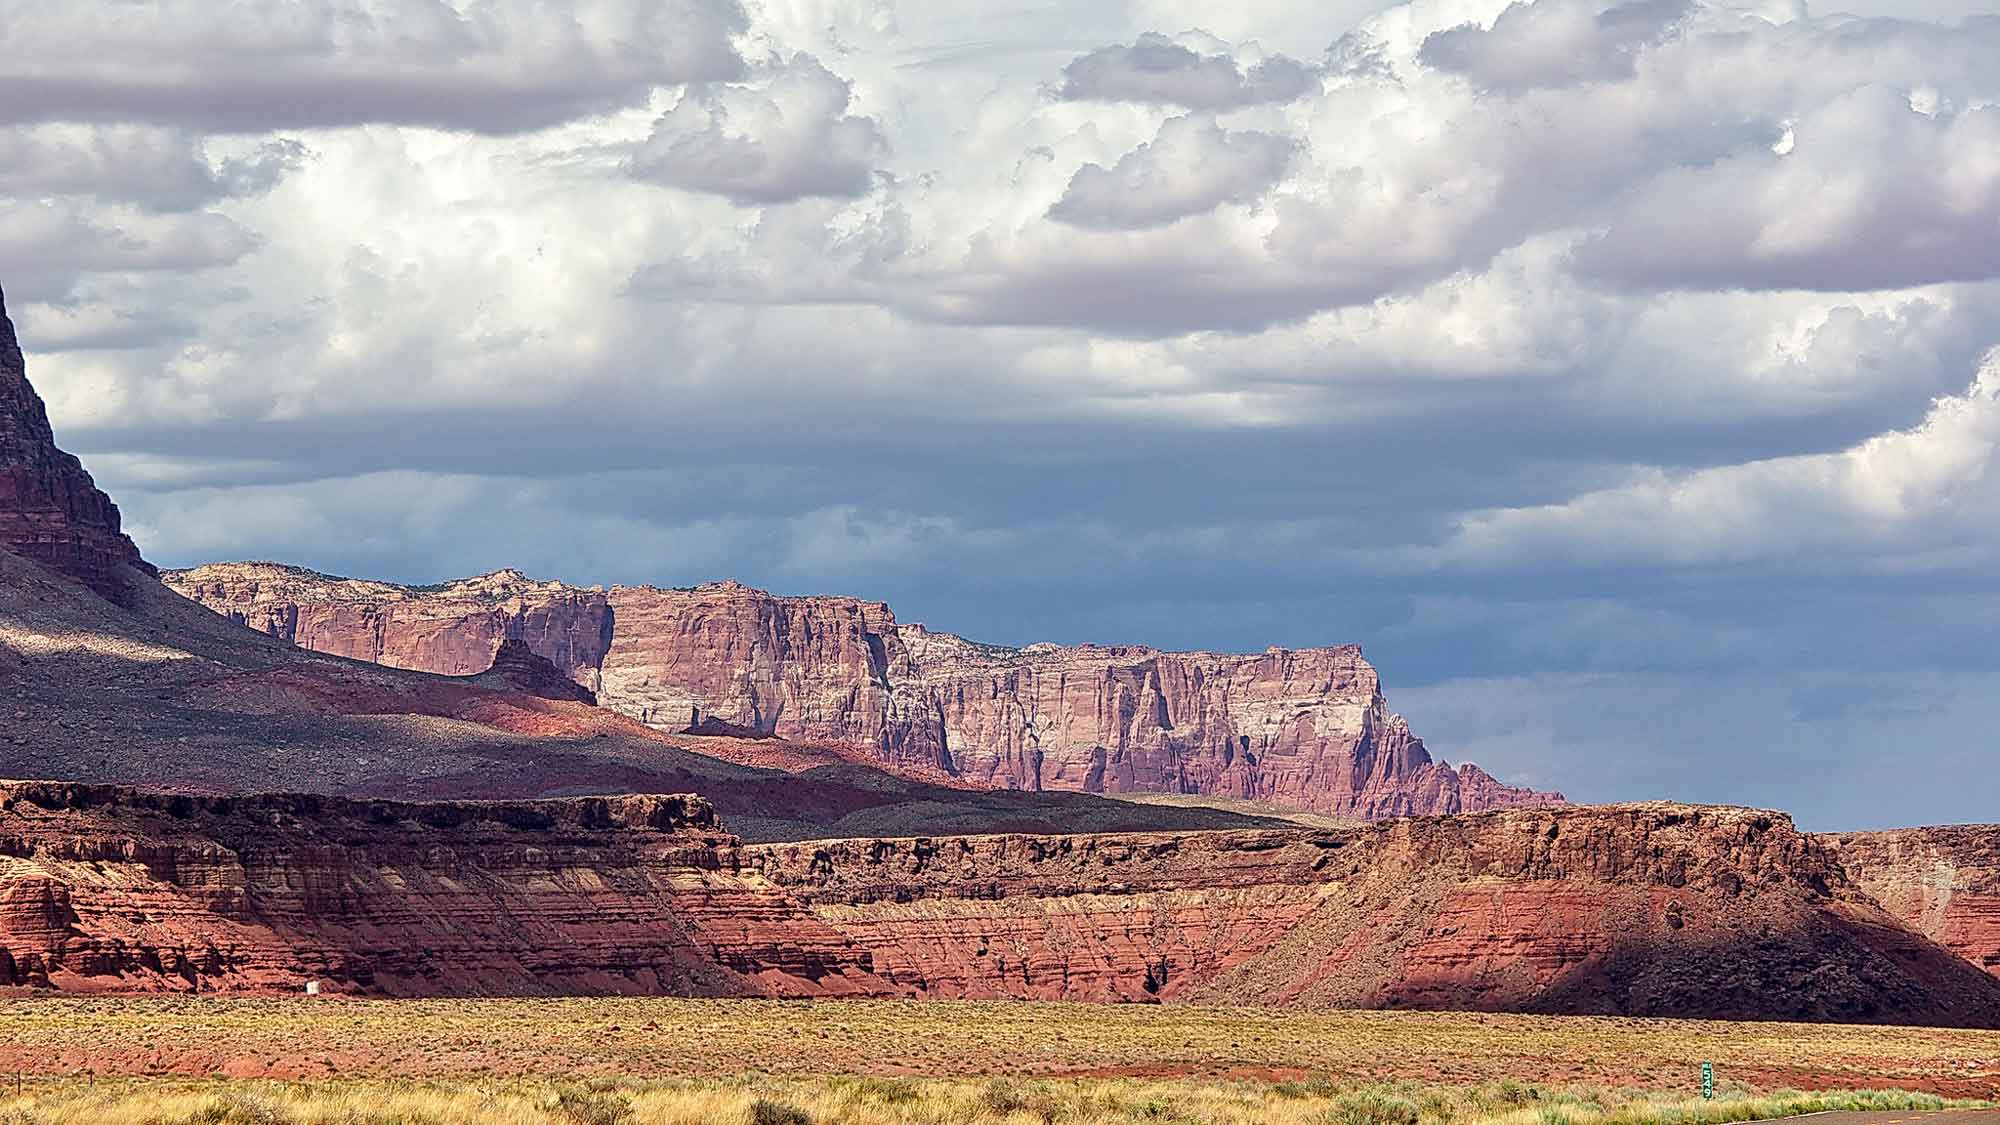 Photograph of the Vermillion Cliffs in Arizona.